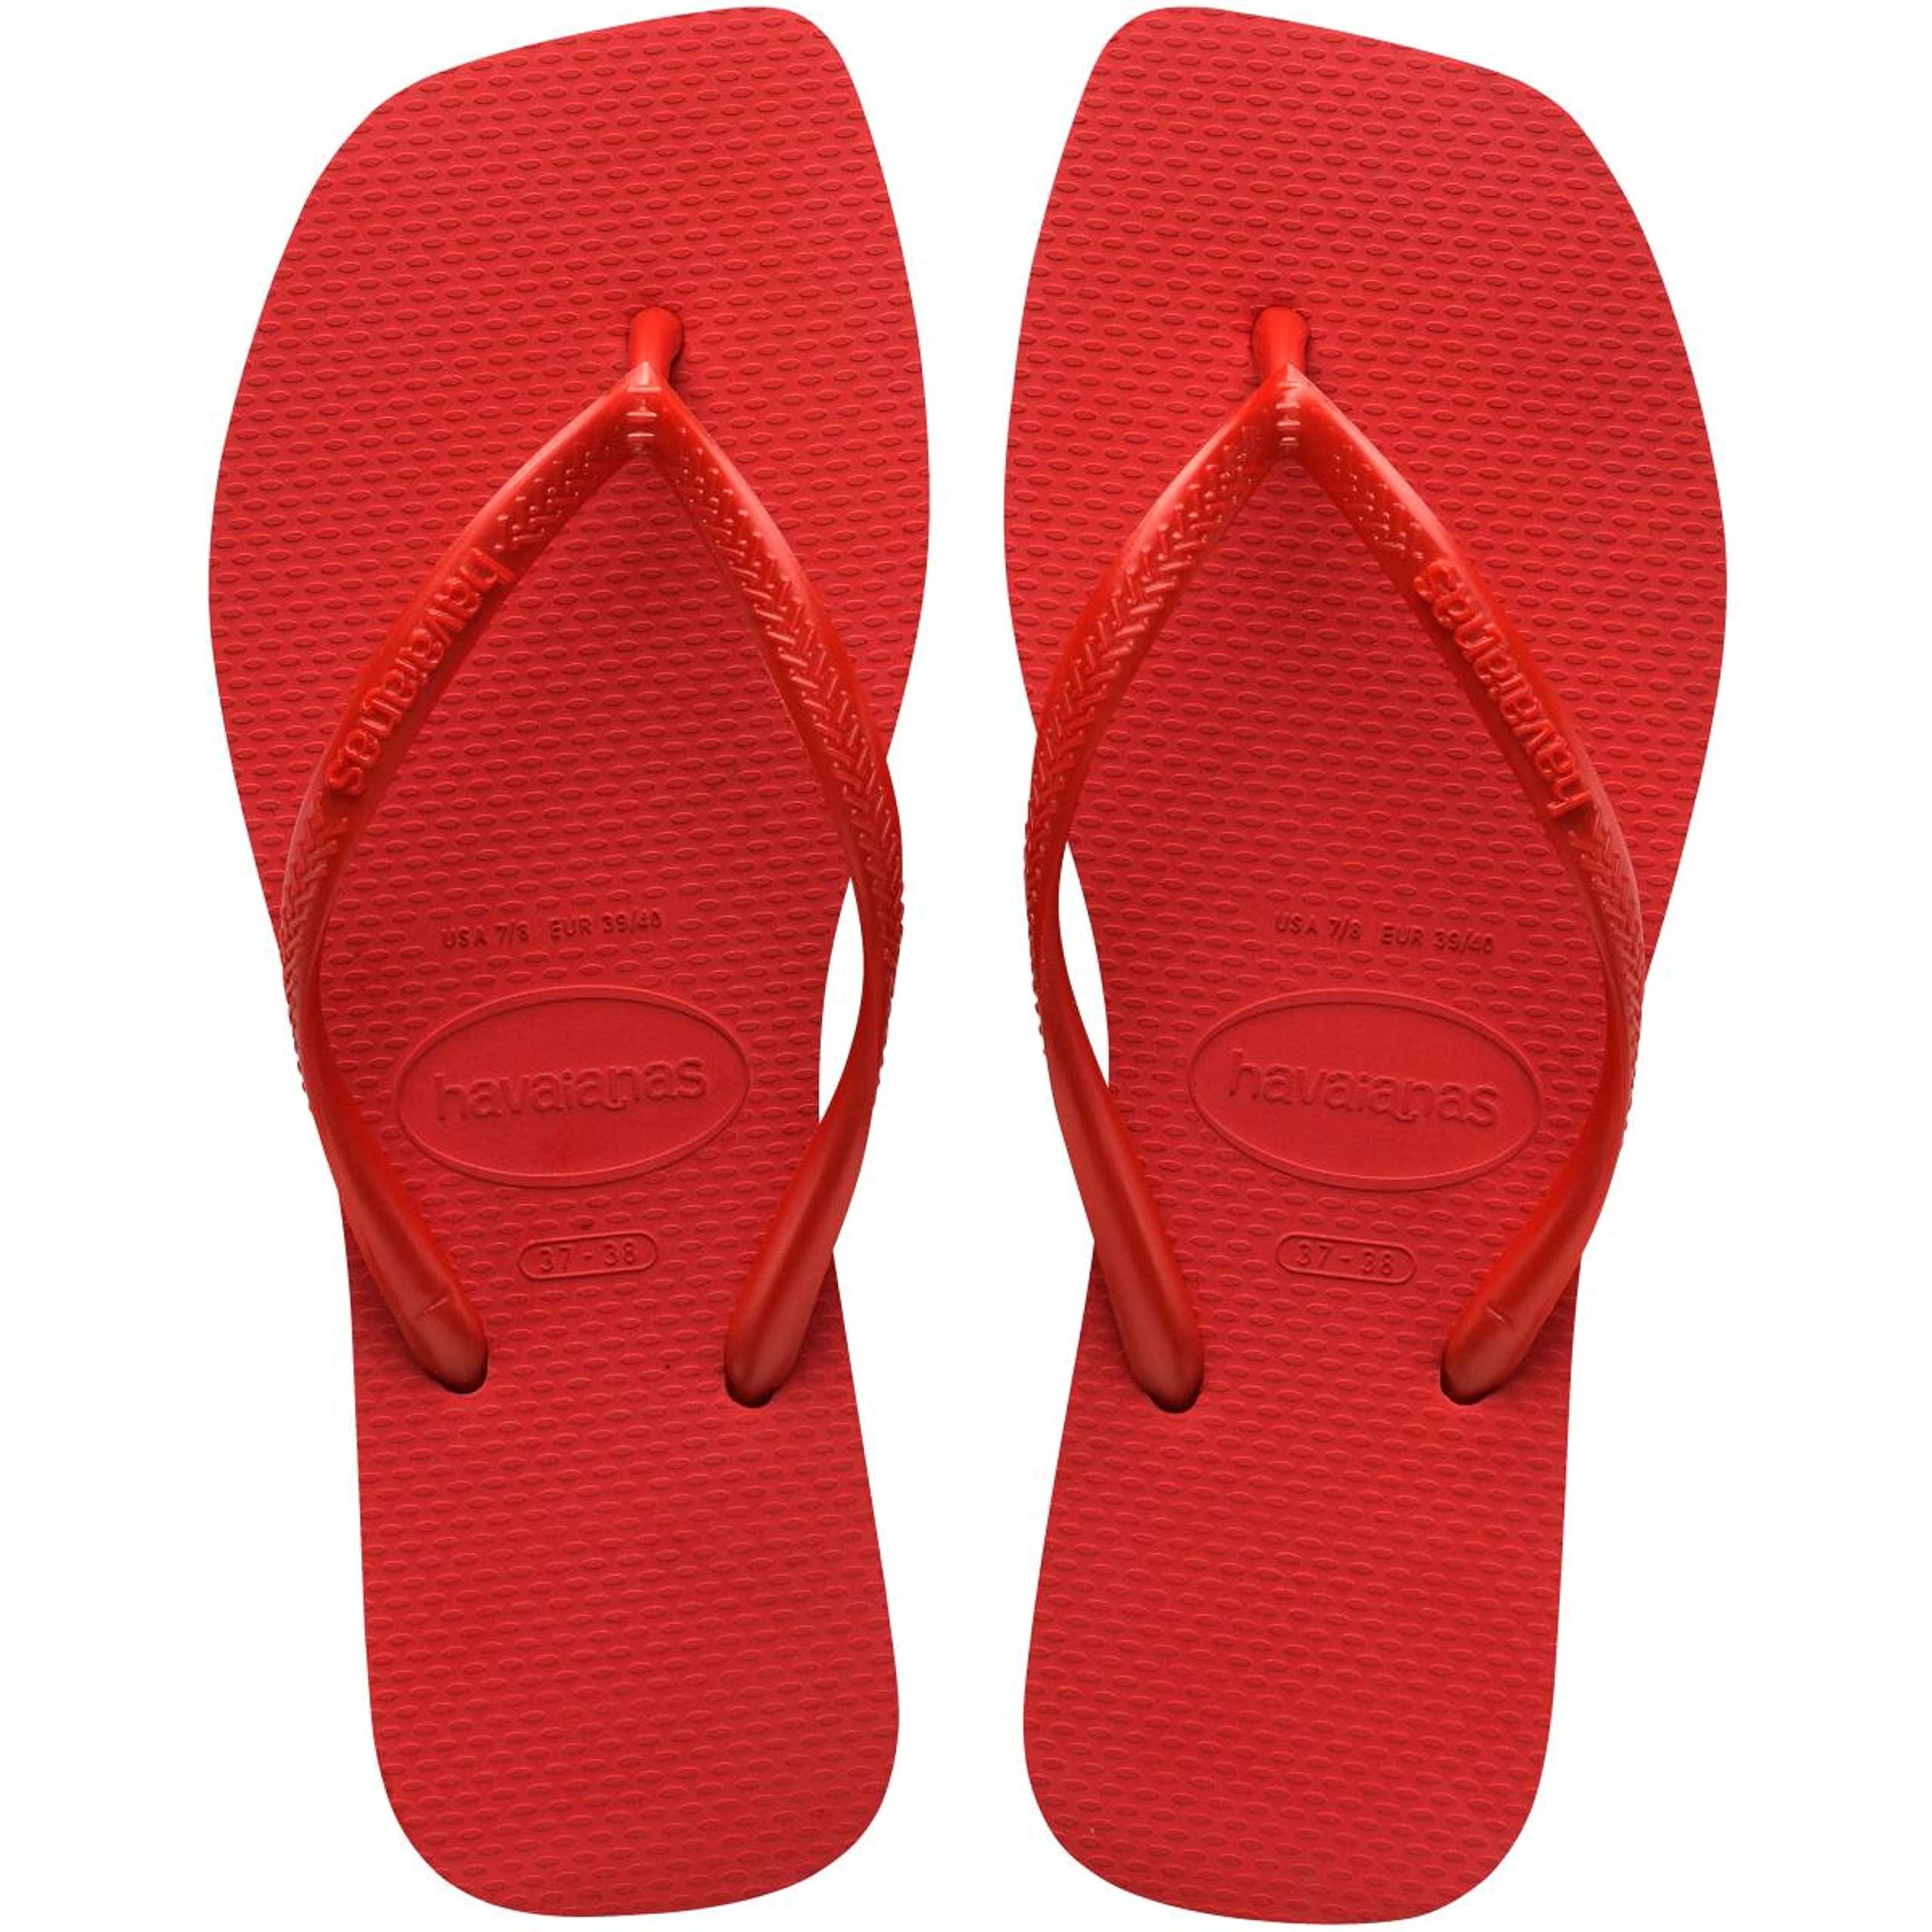 Havaianas Slim Square Flip Flop Sandal in Red | Lyst